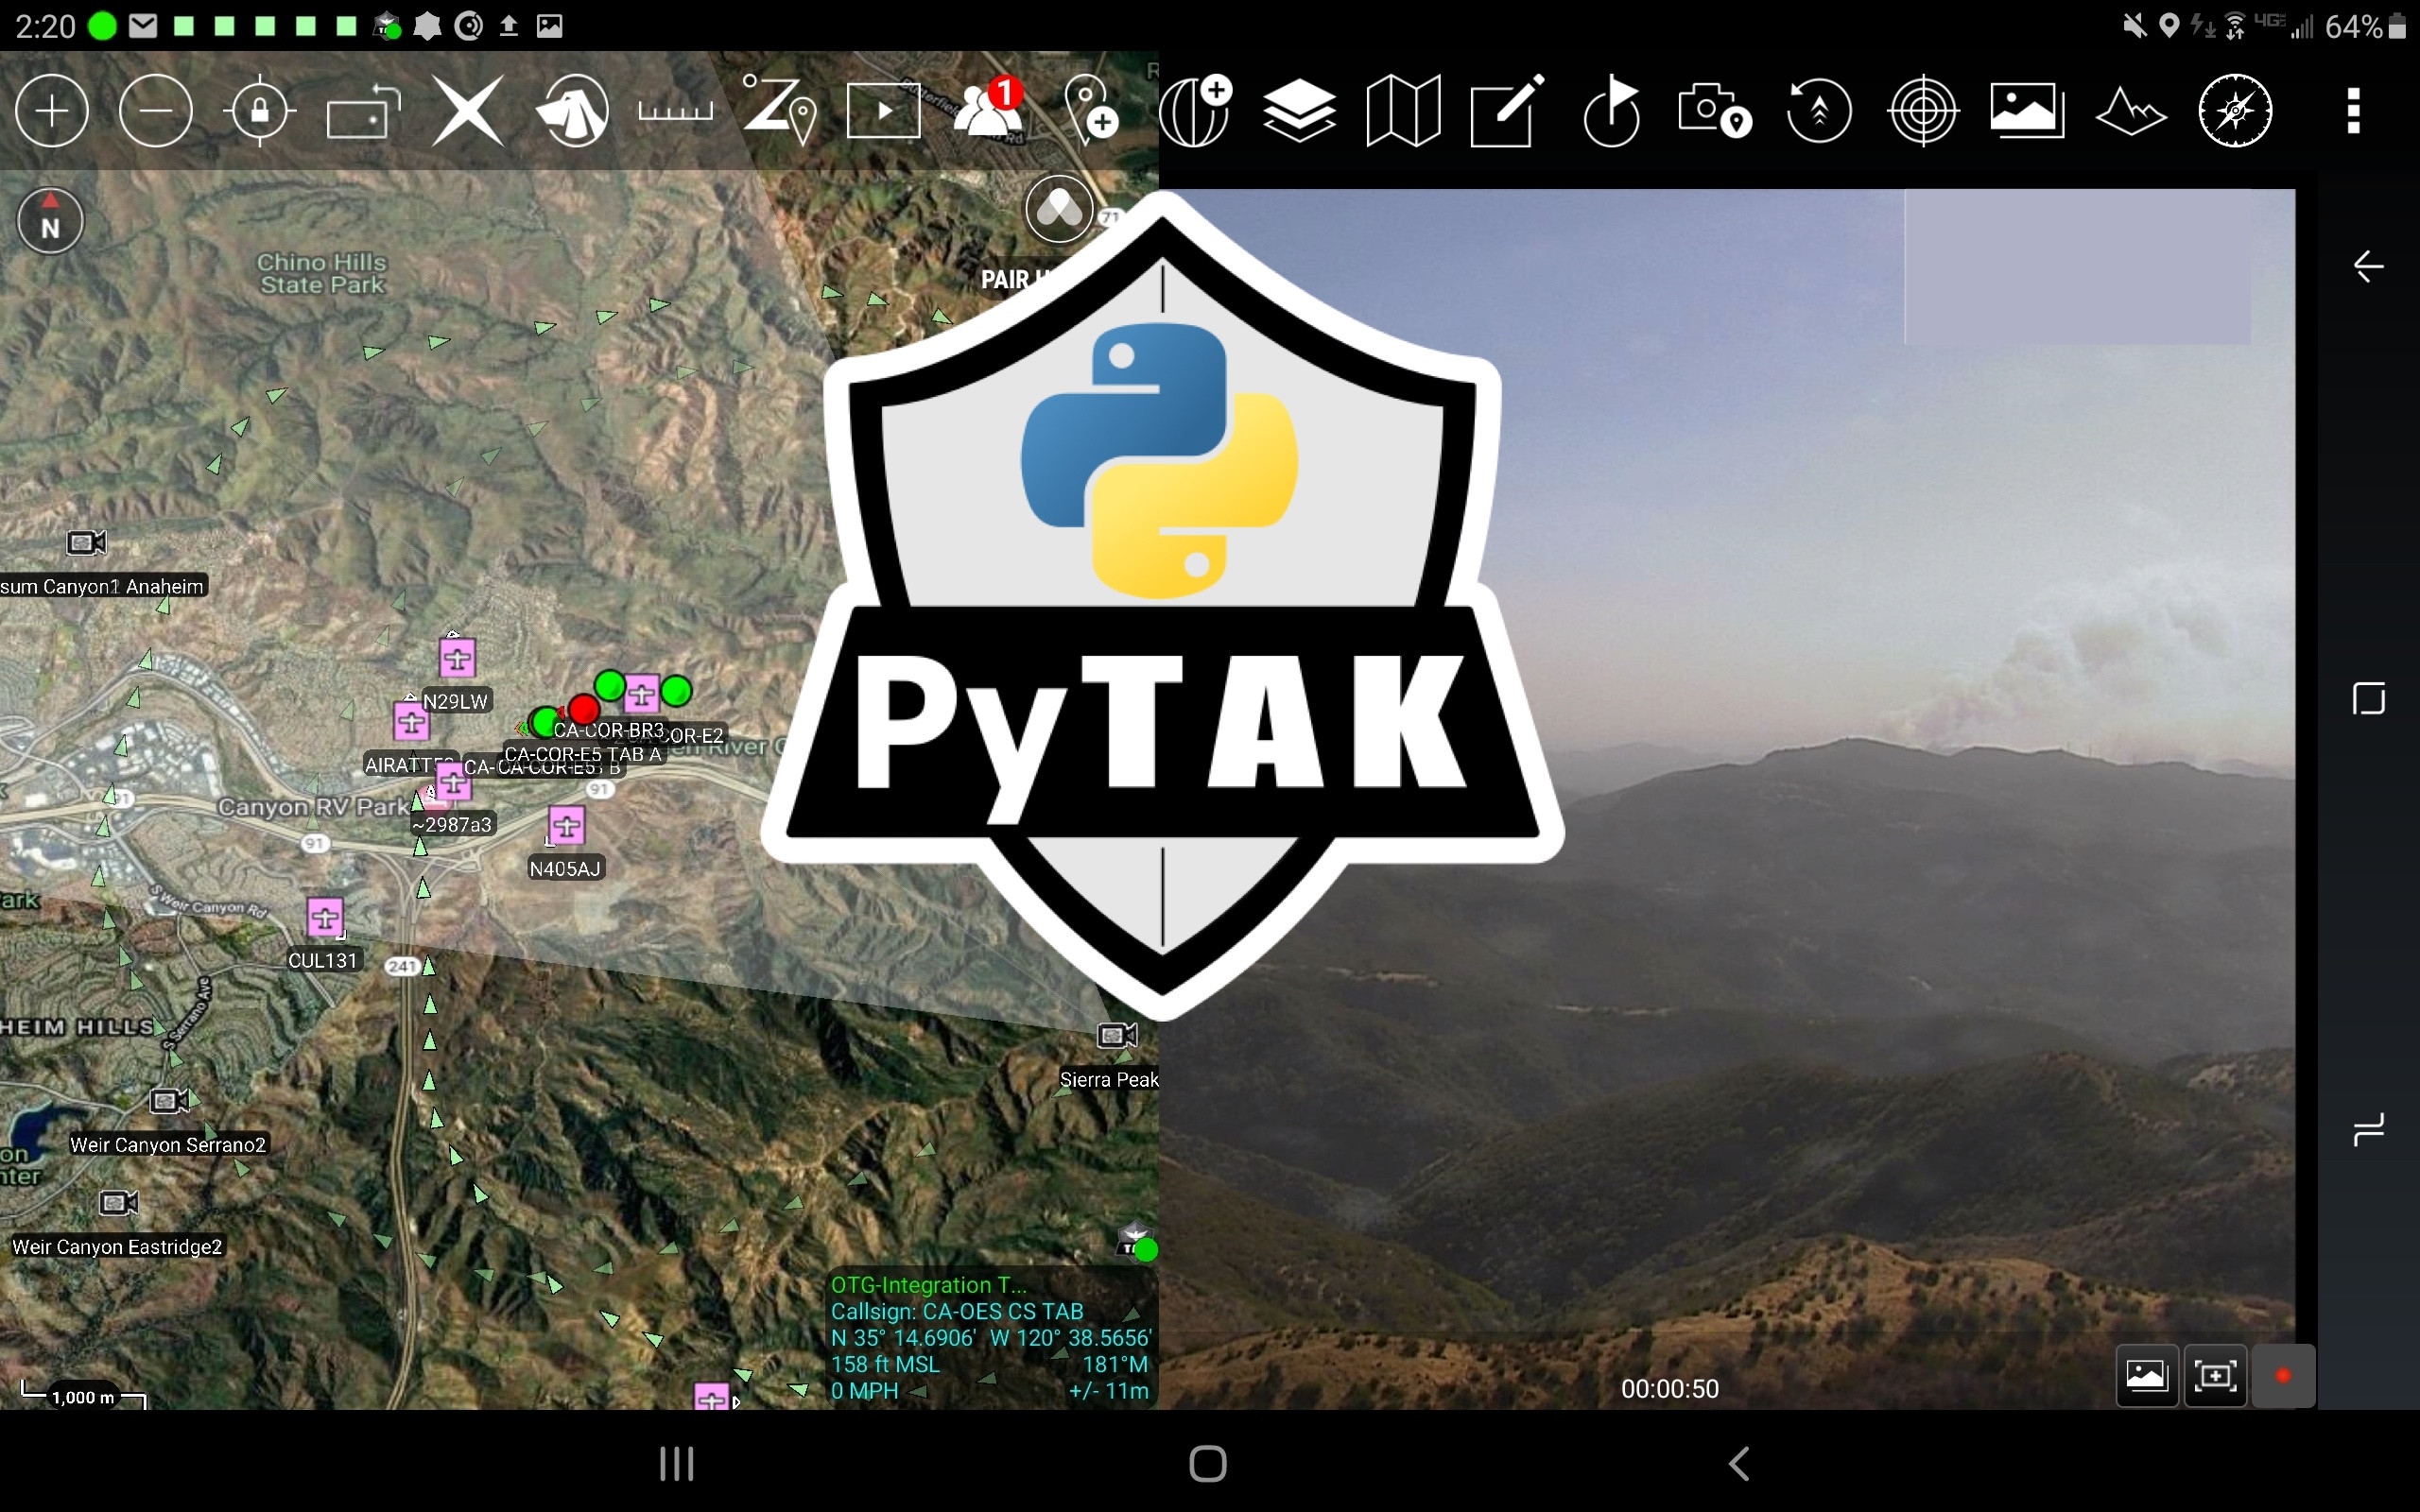 atak_screenshot_with_pytak_logo.jpg